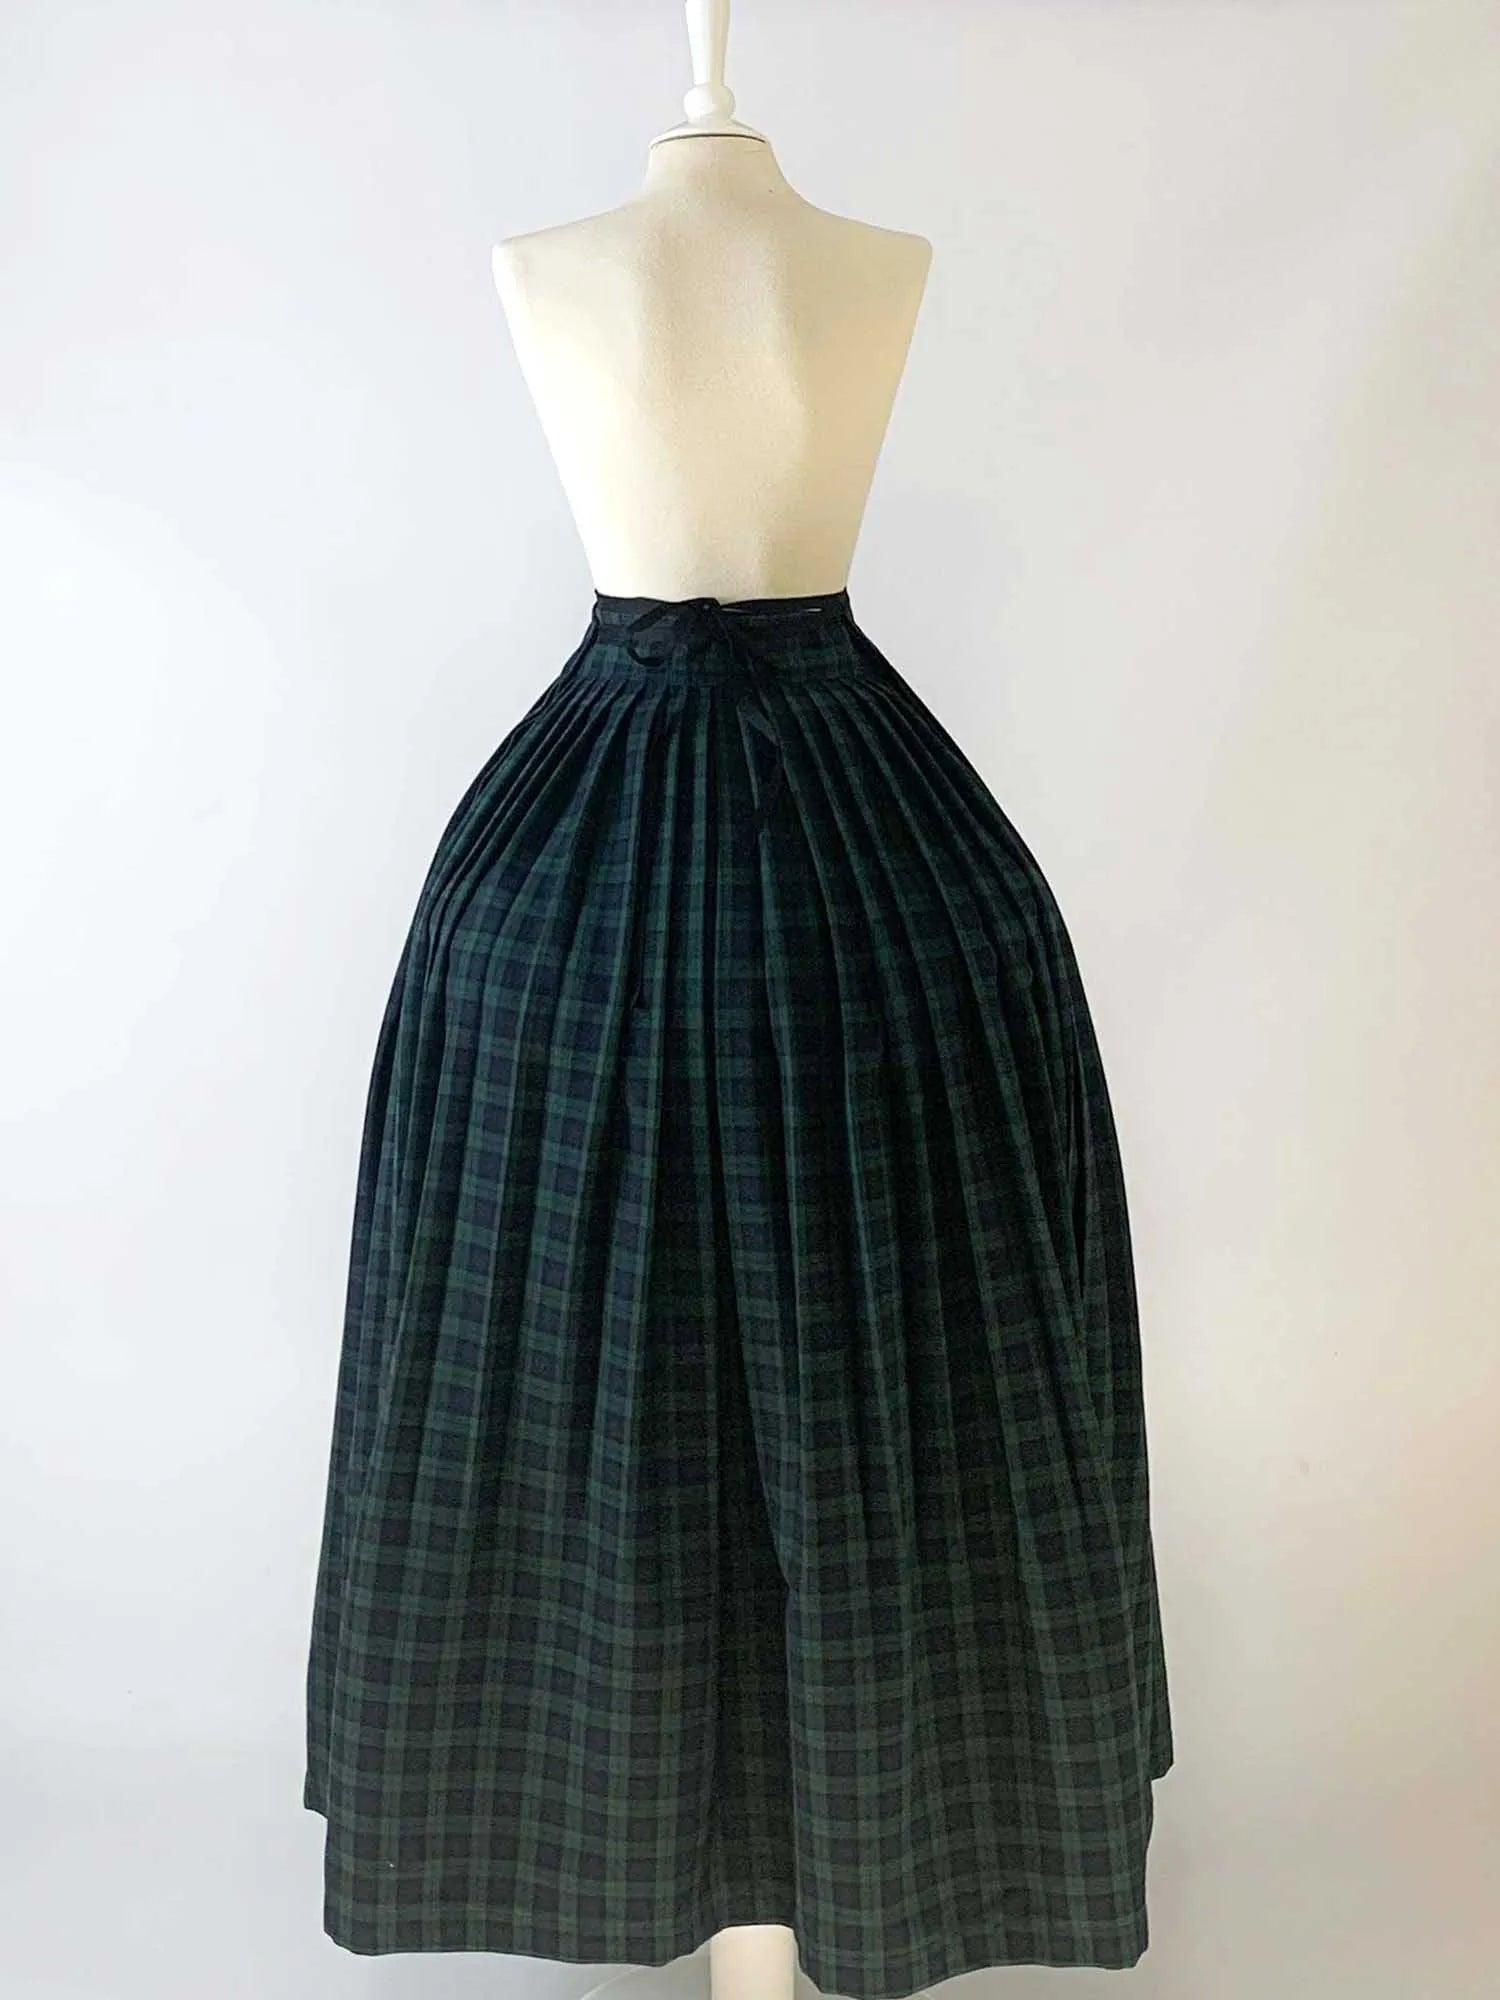 Plaid Skirt in Blackwatch Tartan (small pattern) - Atelier Serraspina